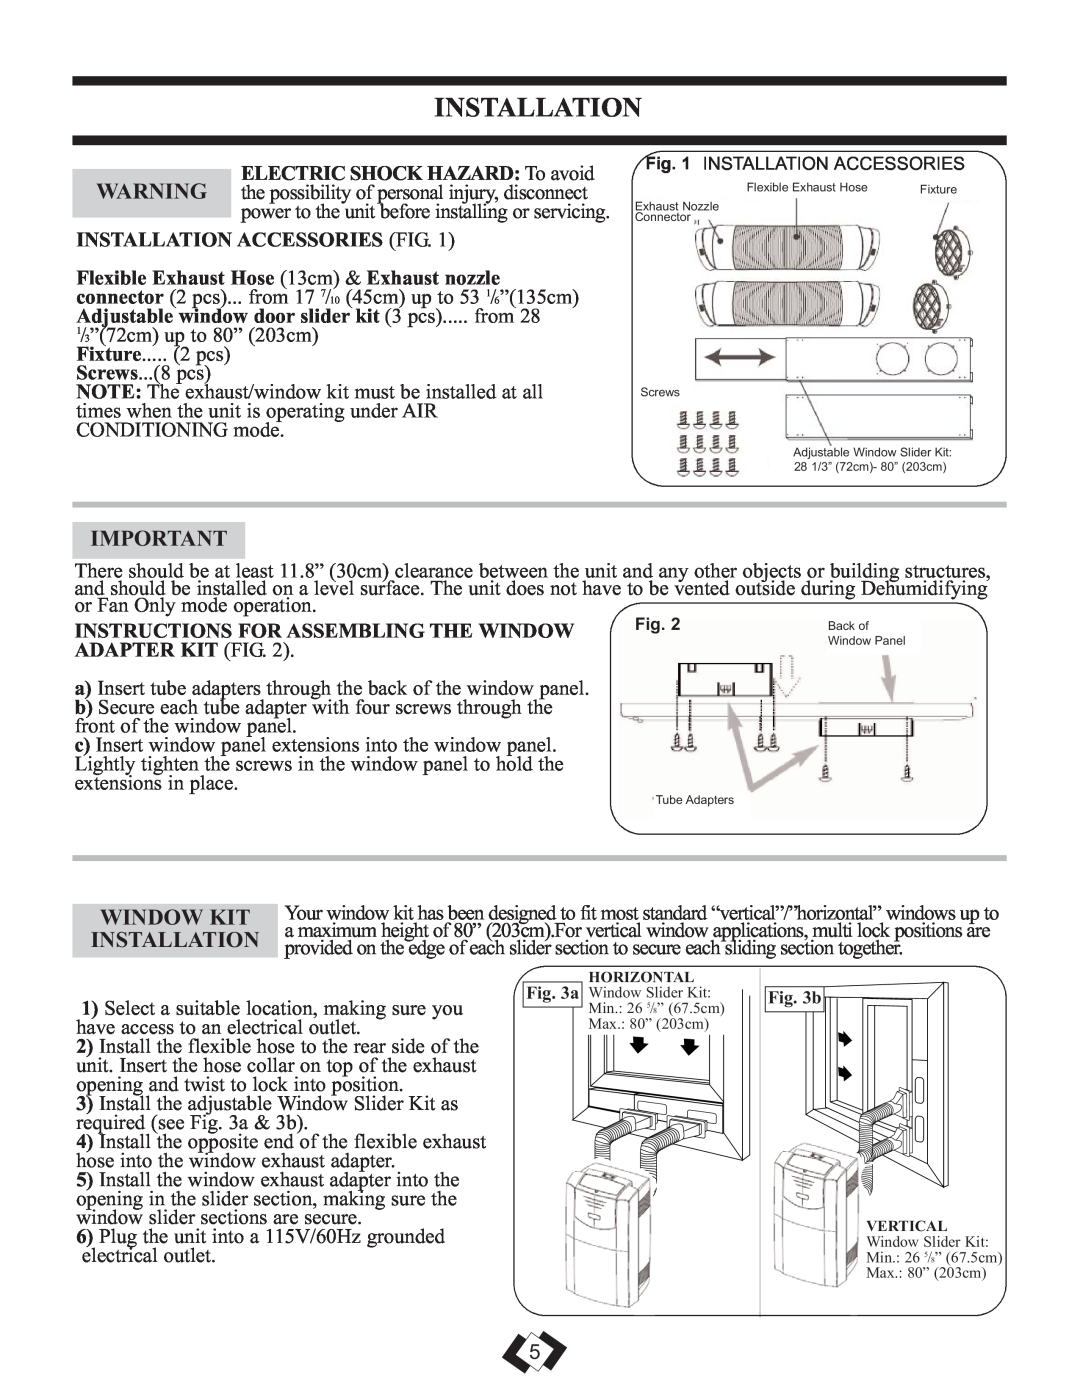 Danby DPAC 12099 manual Window Kit, Installation Accessories Fig, Fixture, 2 pcs 